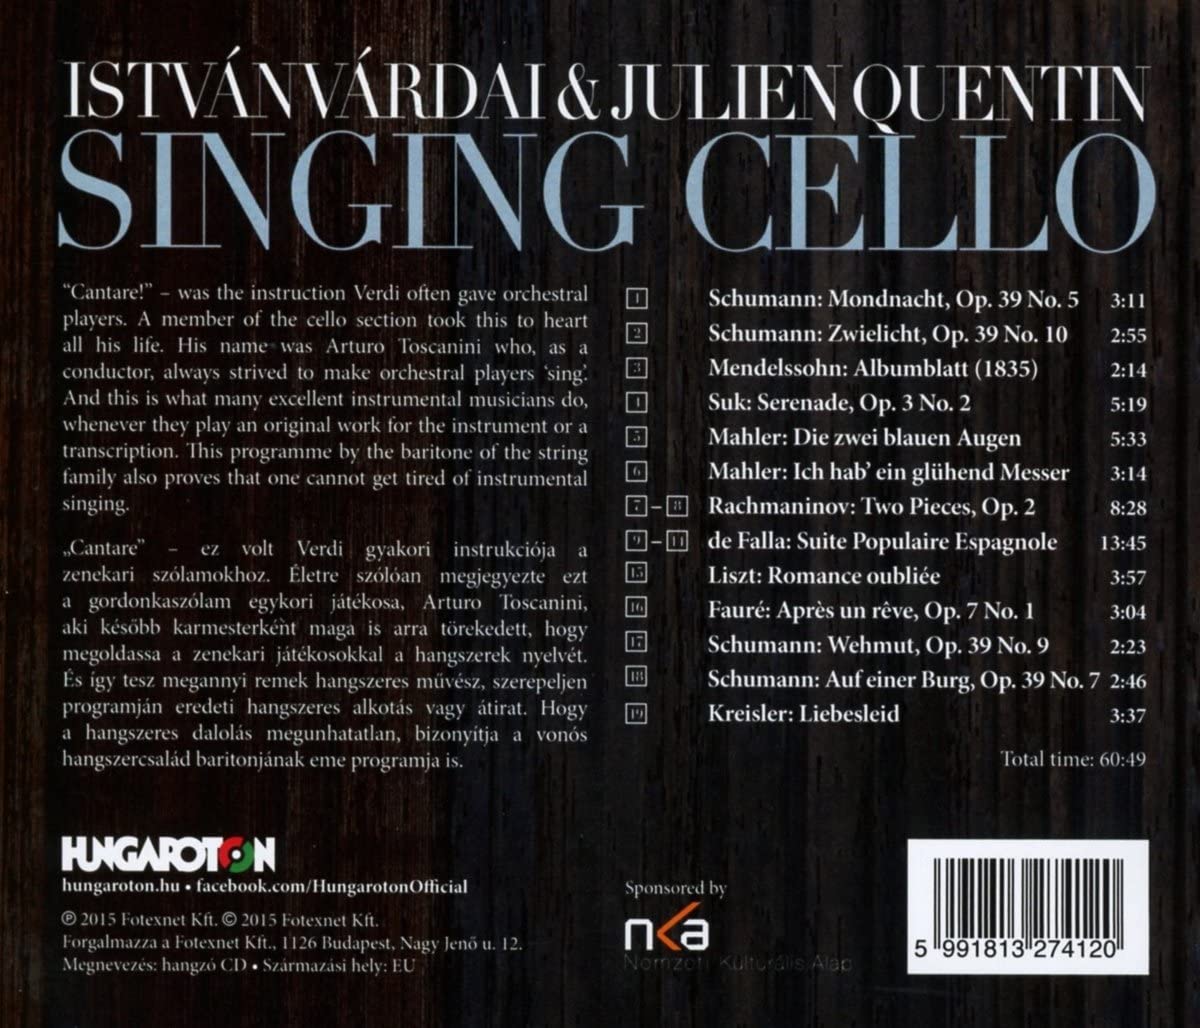 Singing Cello -  Schumann, Mendelssohn, Suk, Liszt, Fauré … - slide-1